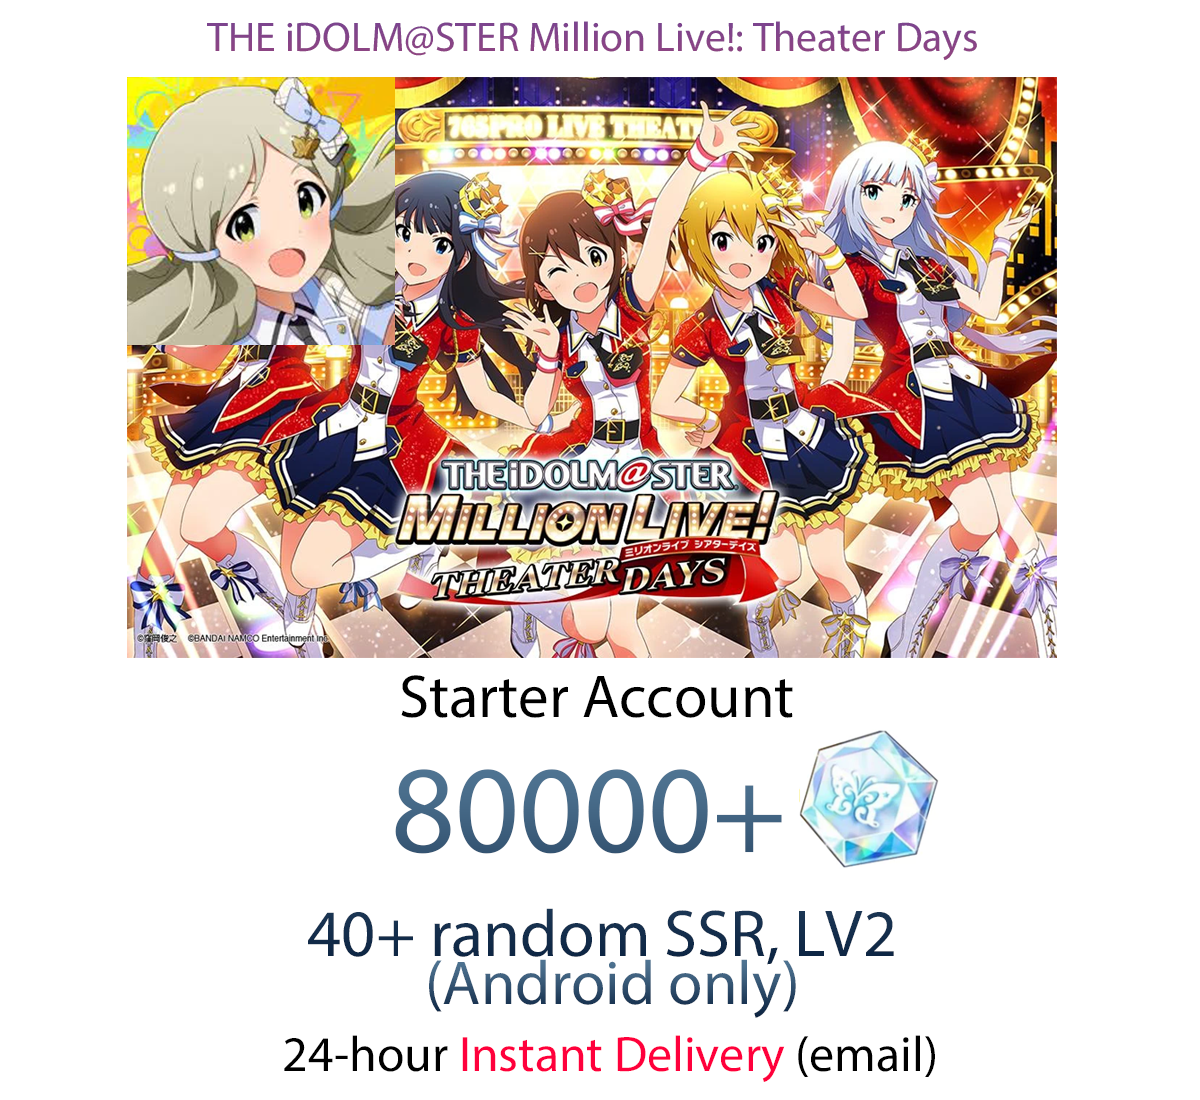 [JP][INSTANT] 80,000 Jewels Idolmaster Million Live Theater Days iDOLM@STER Mirishita Gems Starter Account